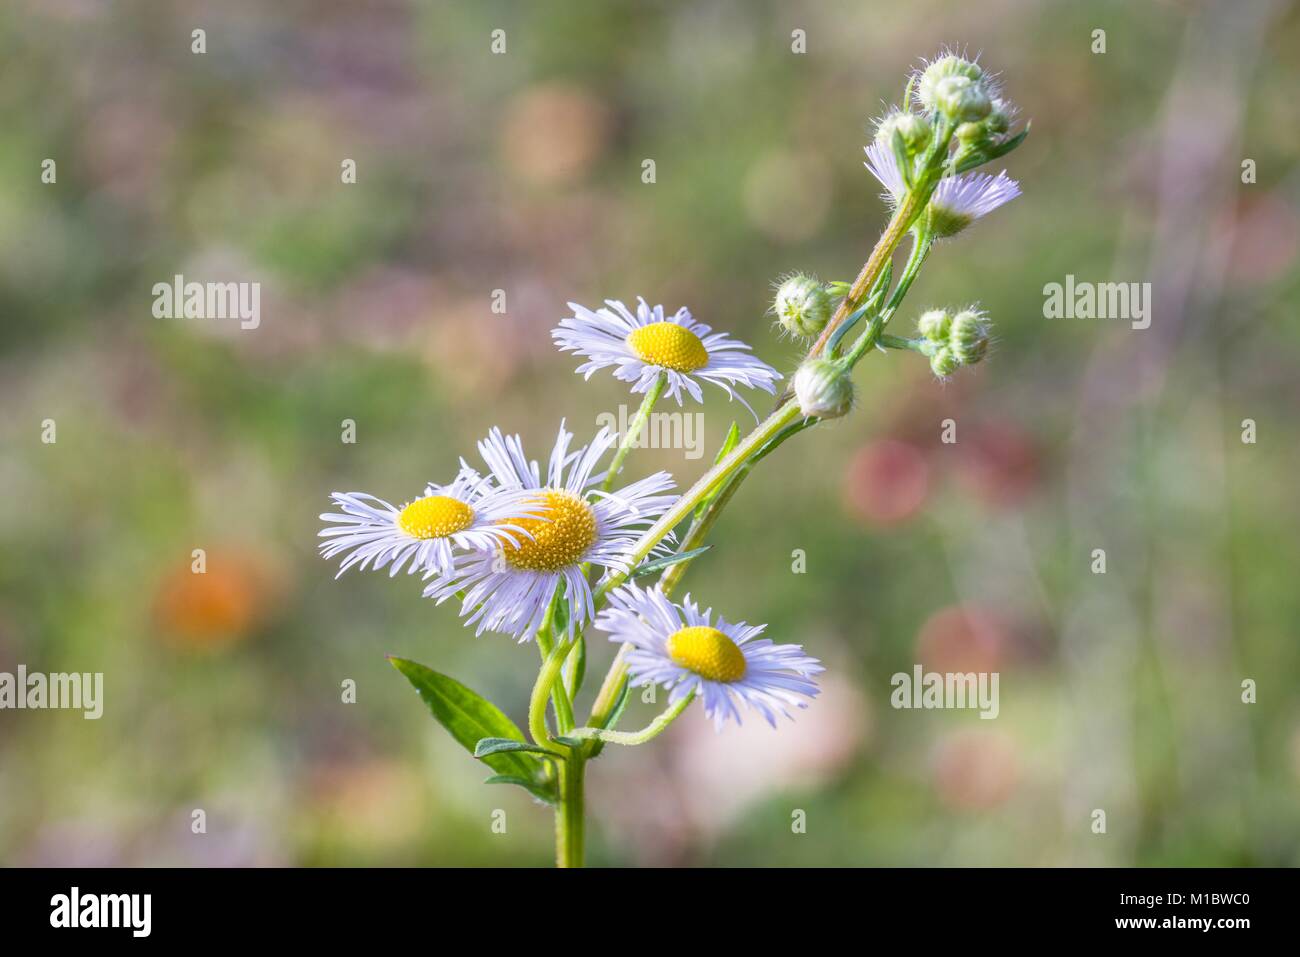 Erigeron flower in the sunlight Stock Photo